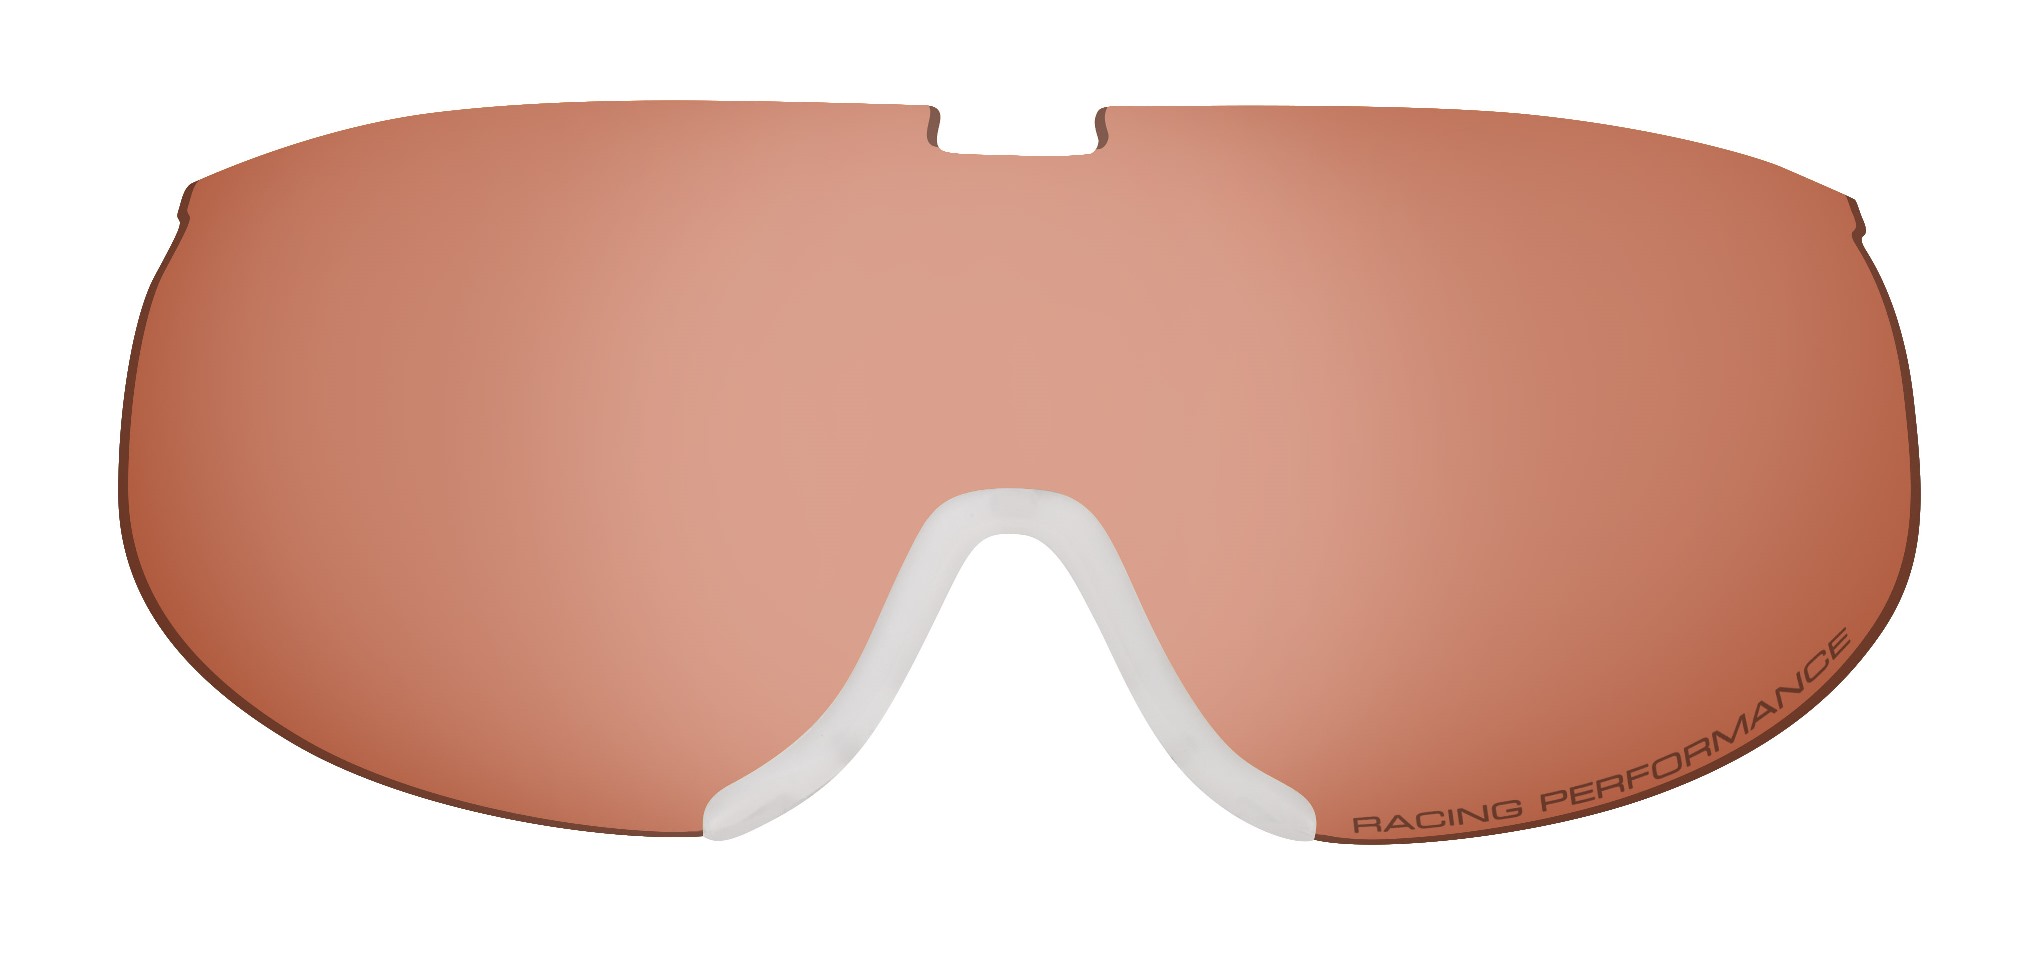 HTGL27/OR Náhradní čočka k lyžařským brýlím NORDIC HTG27 oranžová  -